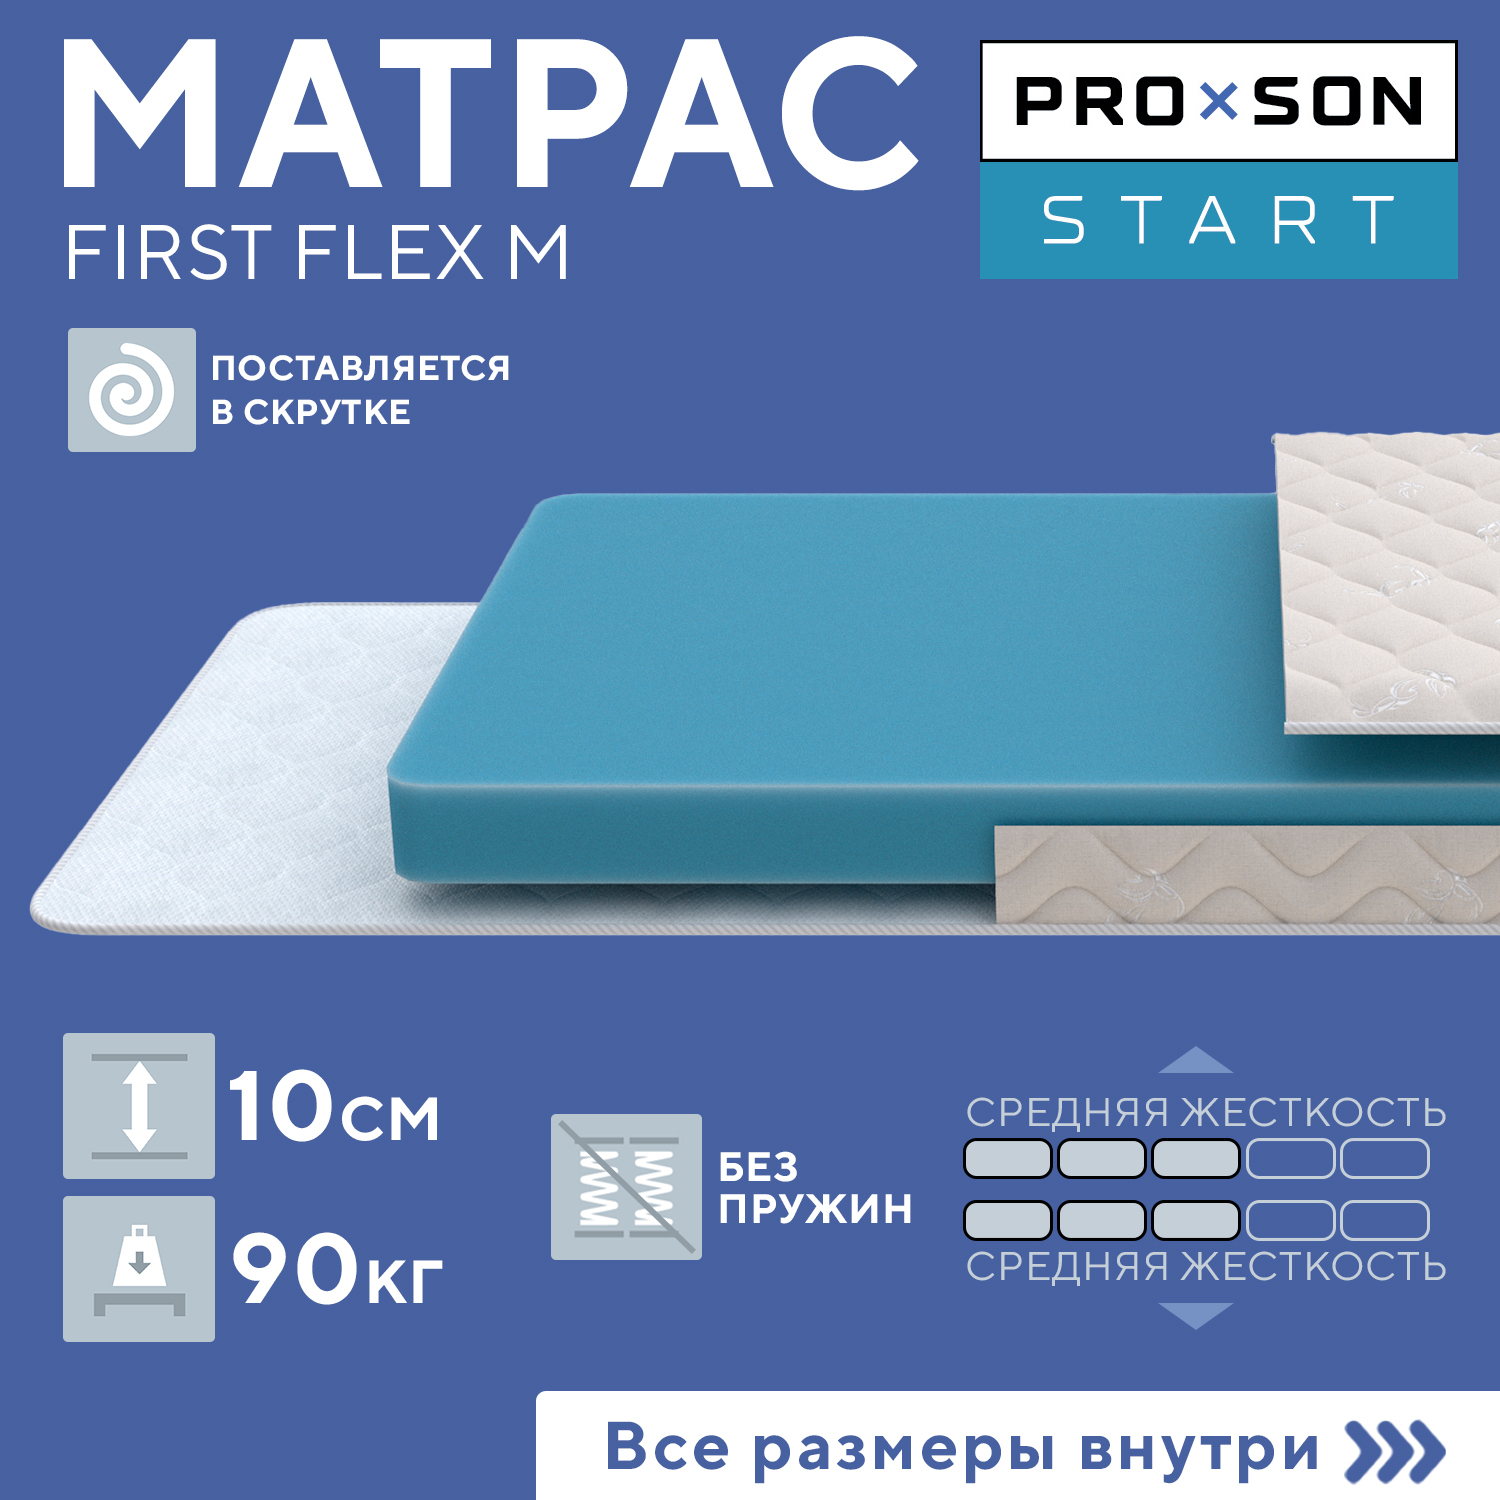 Foam матрас Pro son first Flex m пахнет